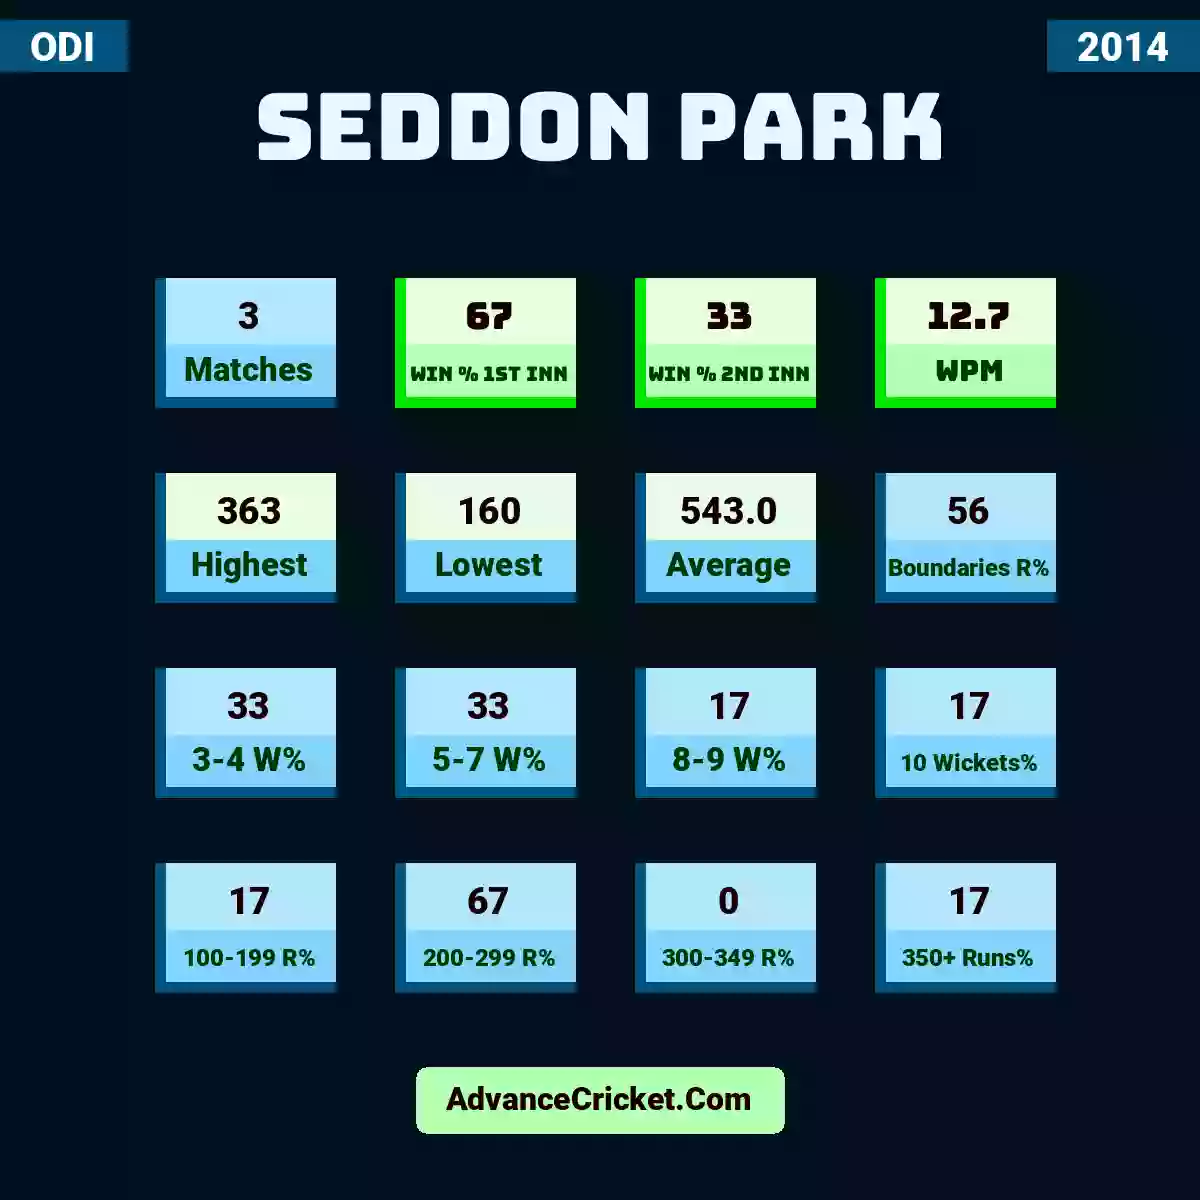 Image showing Seddon Park with Matches: 3, Win % 1st Inn: 67, Win % 2nd Inn: 33, WPM: 12.7, Highest: 363, Lowest: 160, Average: 543.0, Boundaries R%: 56, 3-4 W%: 33, 5-7 W%: 33, 8-9 W%: 17, 10 Wickets%: 17, 100-199 R%: 17, 200-299 R%: 67, 300-349 R%: 0, 350+ Runs%: 17.